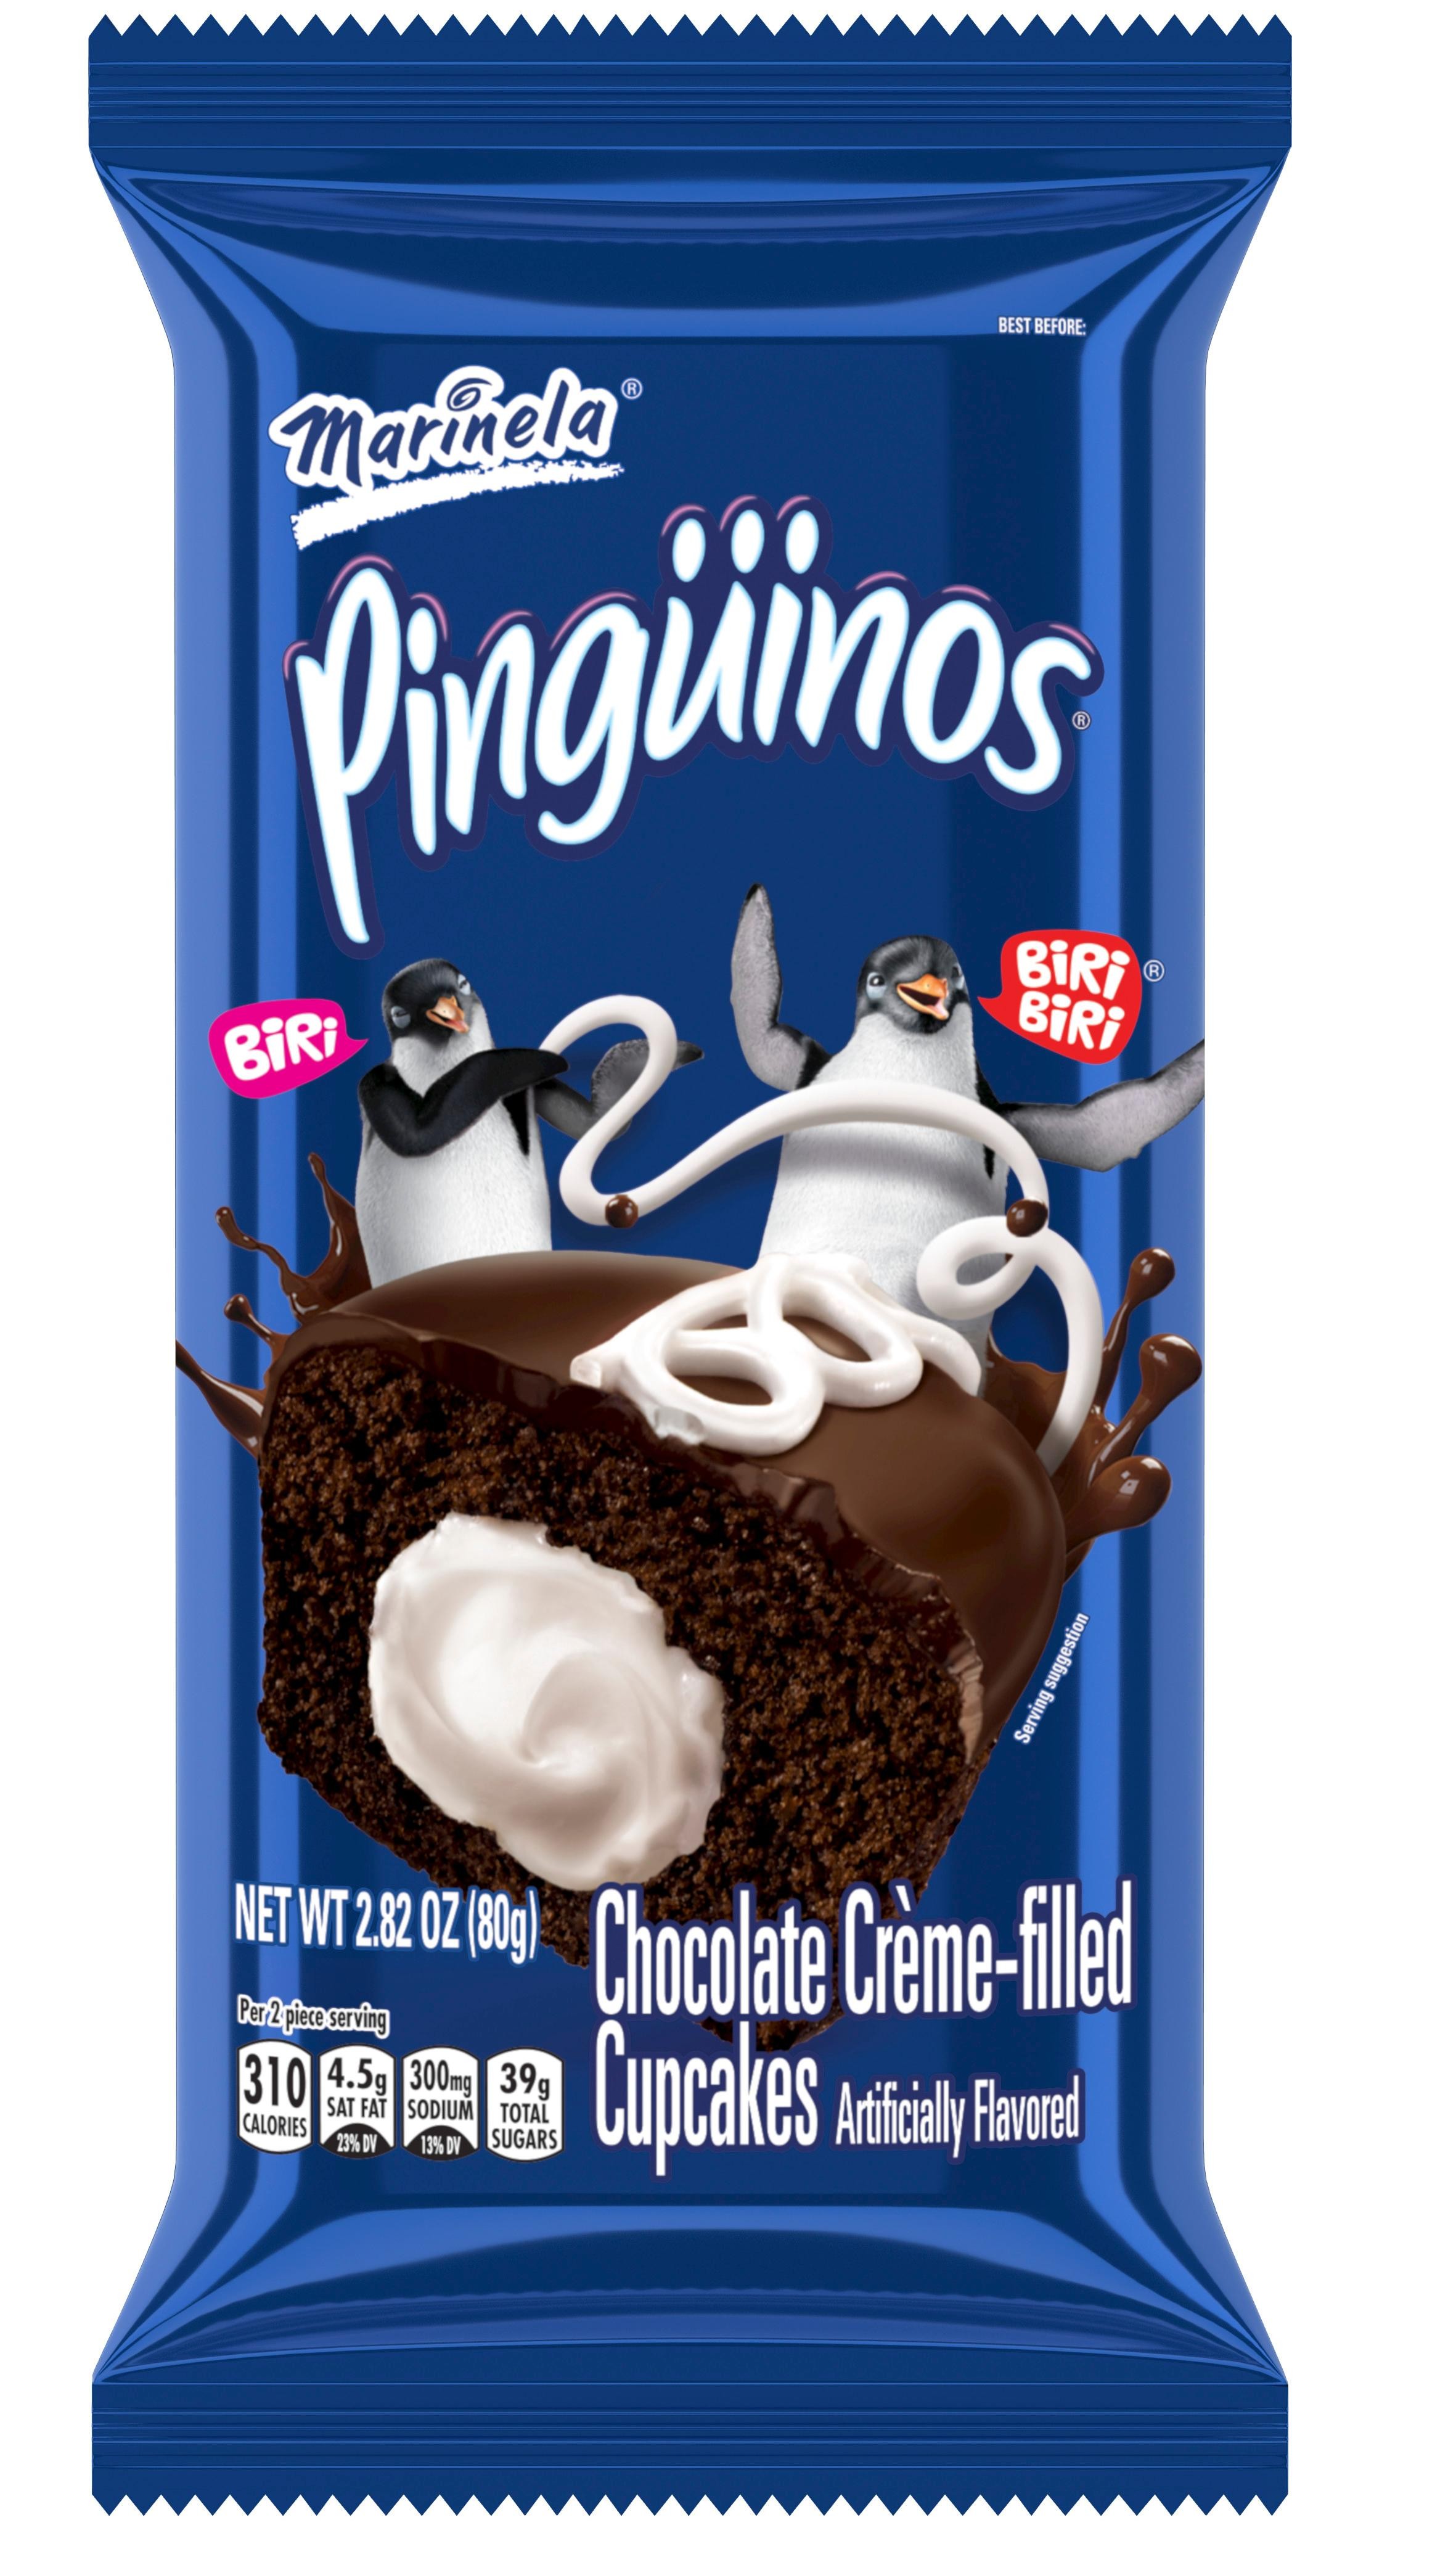 Pinguino Creme Filled Chocolate Cupcakes 2ct